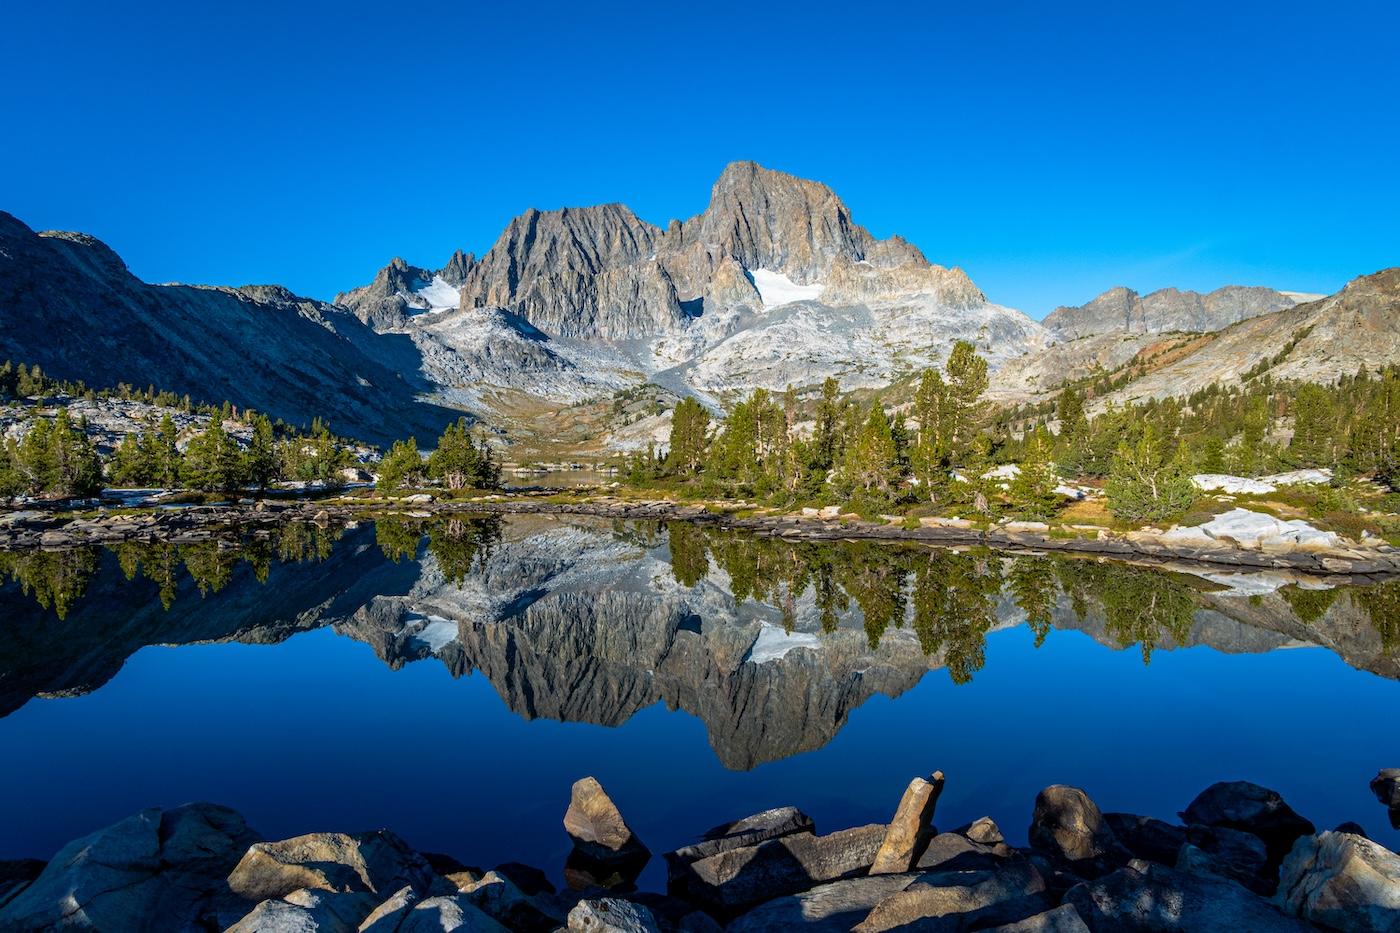 Morning shot of Garnet Lake in the Sierras. Photo by Brock Dallman